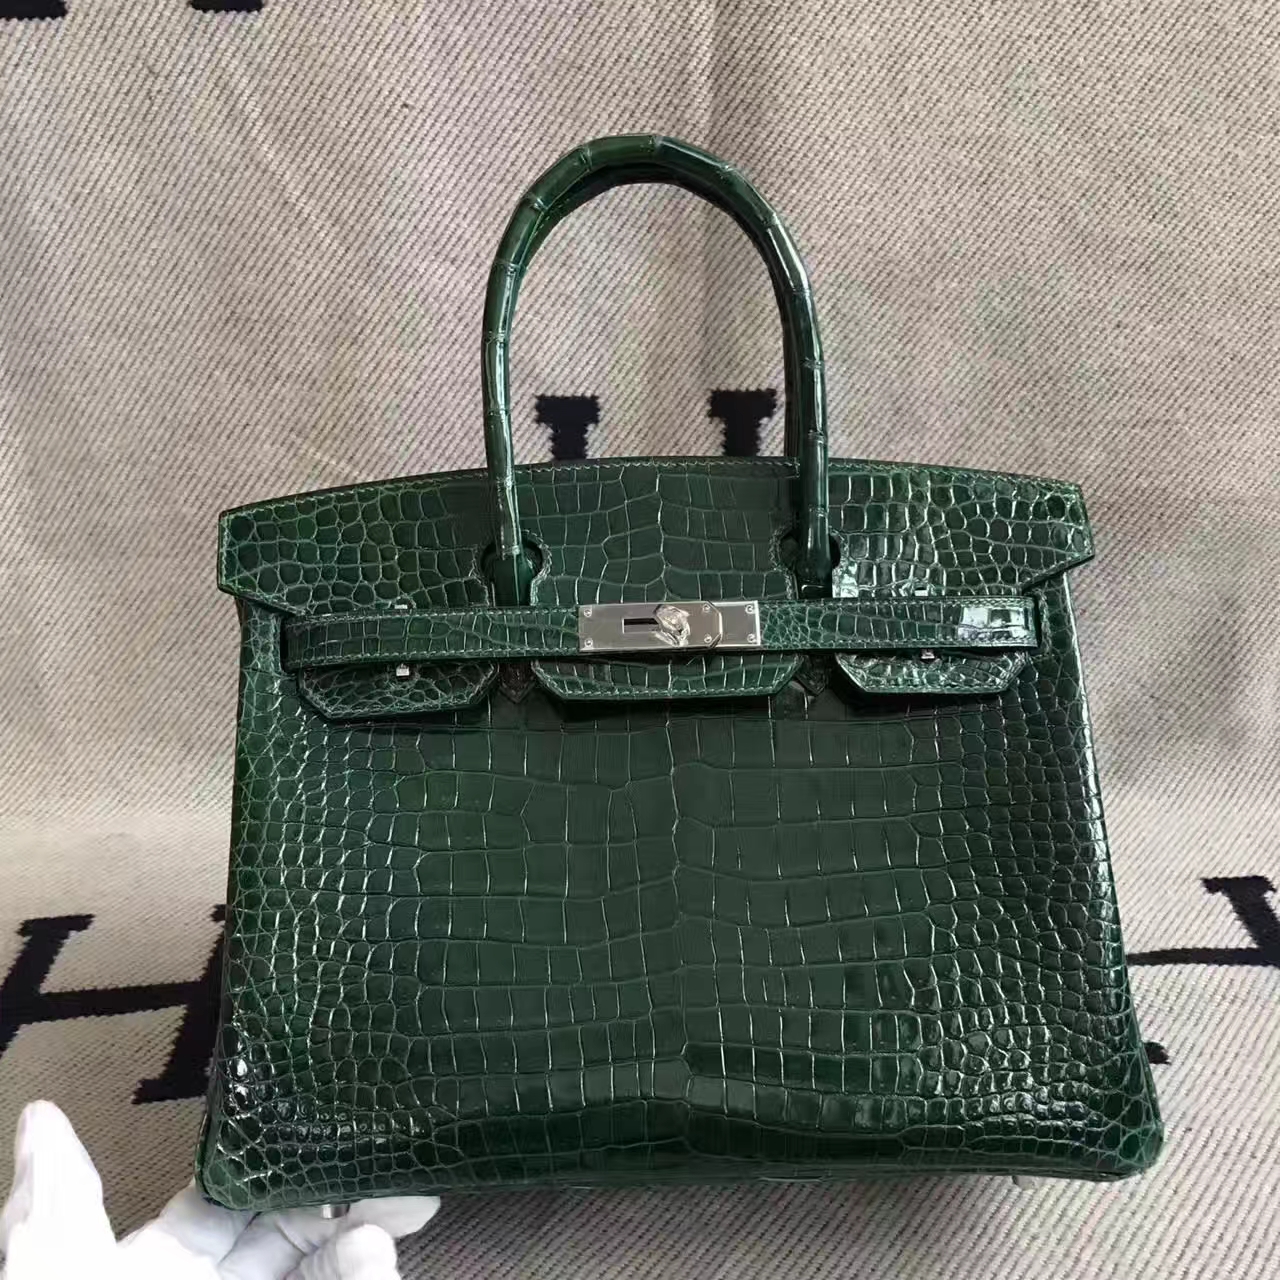 Discount Hermes CK67 Vert Fonce Porosus Shiny Leather Birkin Bag 30cm